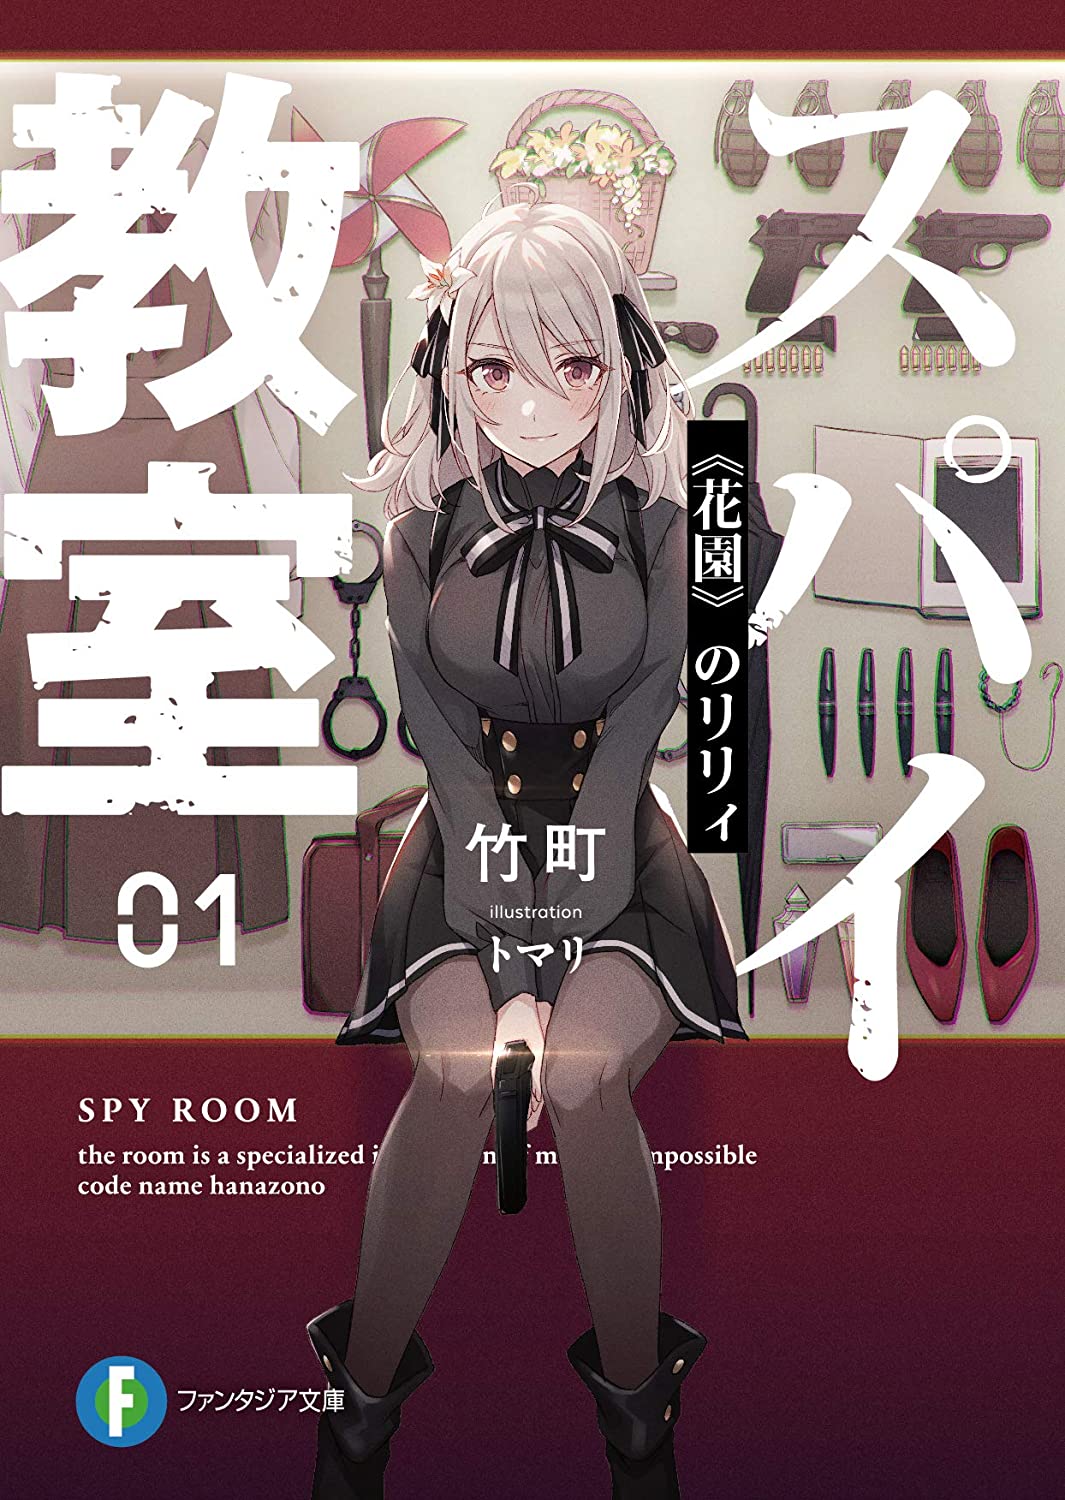 Manga Mogura RE on X: Spy Classroom Anime Adaption will reveal